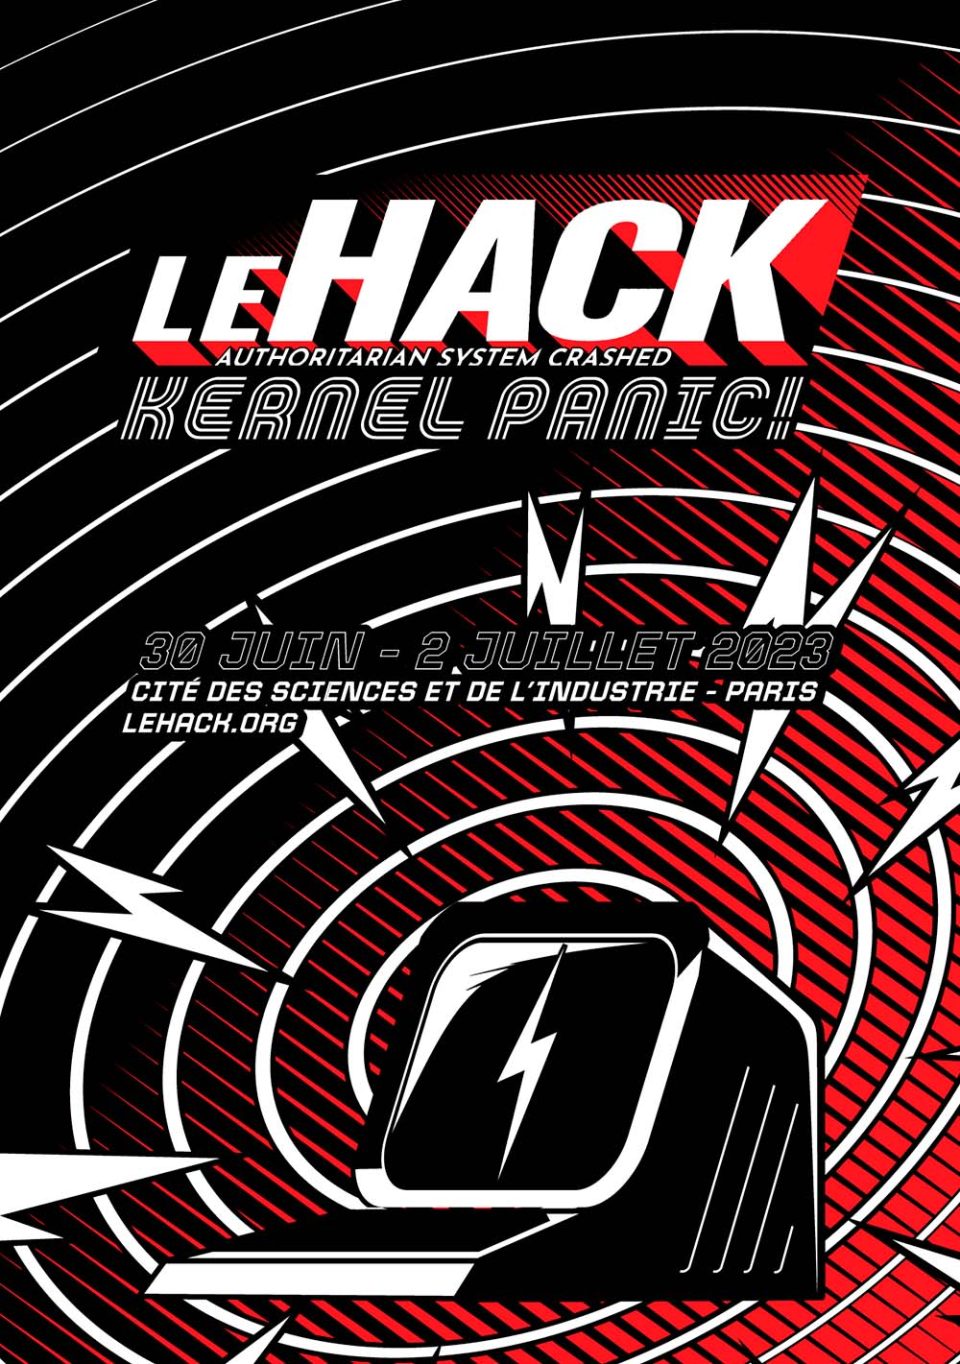 leHACK! Hackers conference.